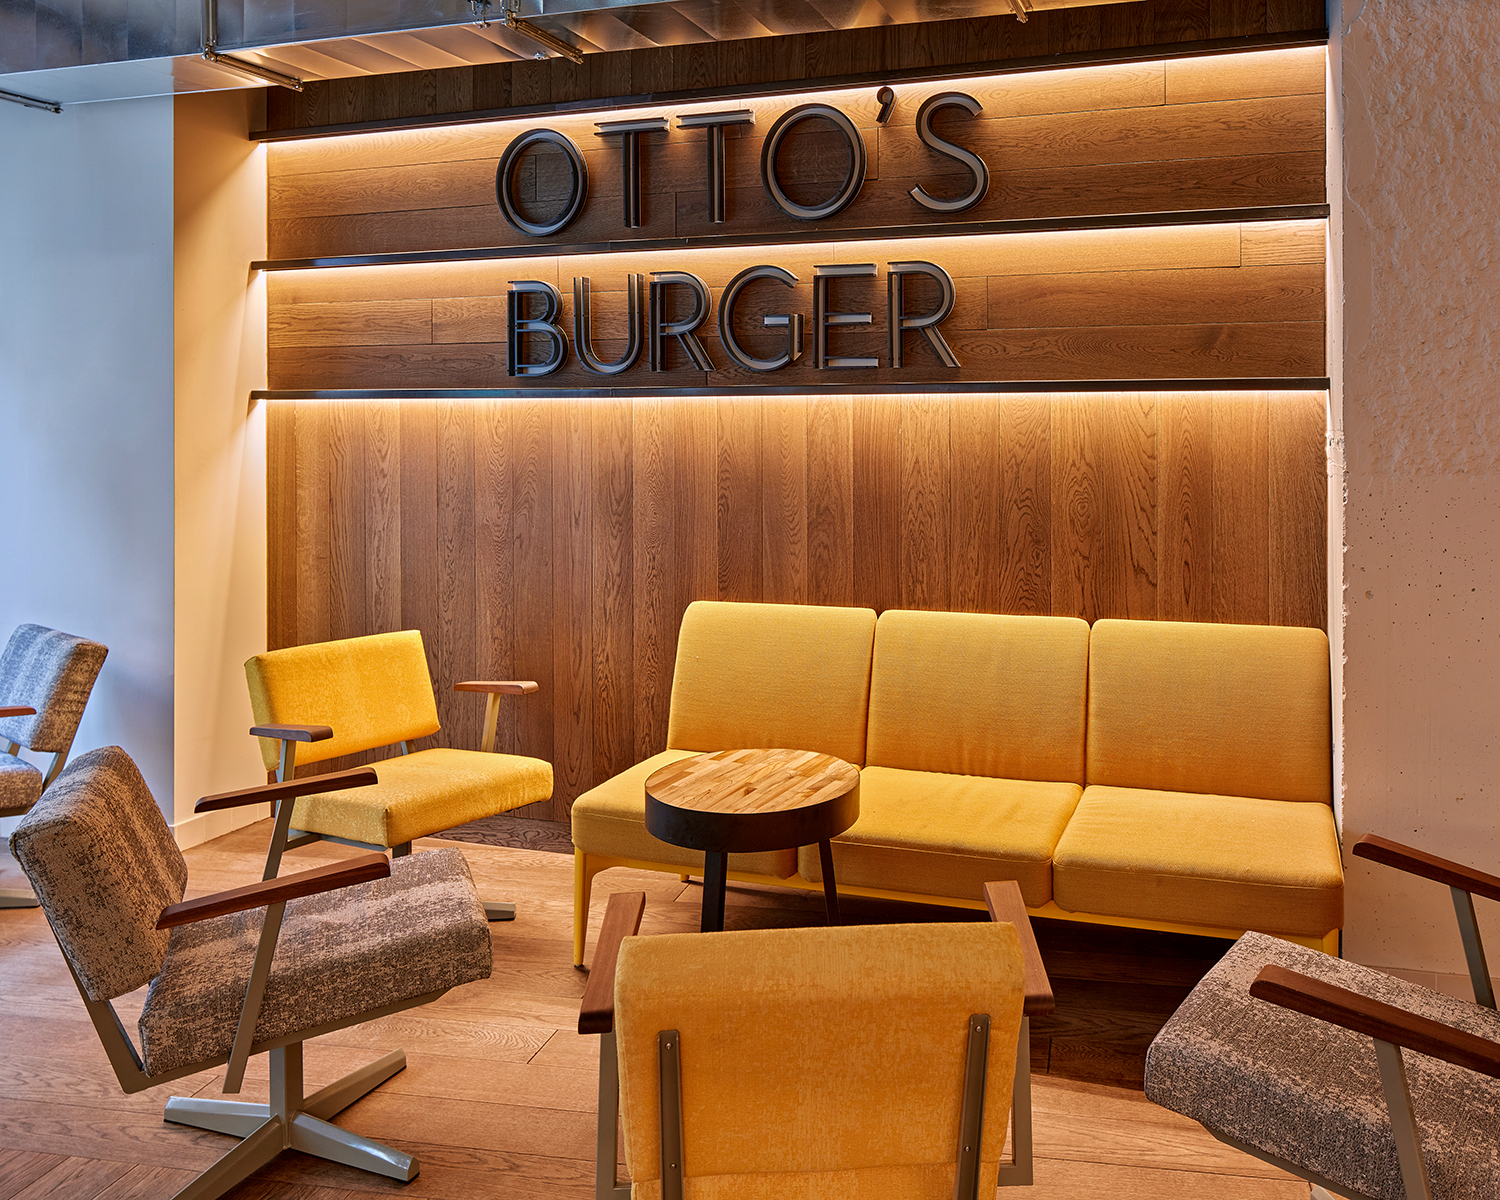 Otto's Burger Cologne / Studio Modijefsky